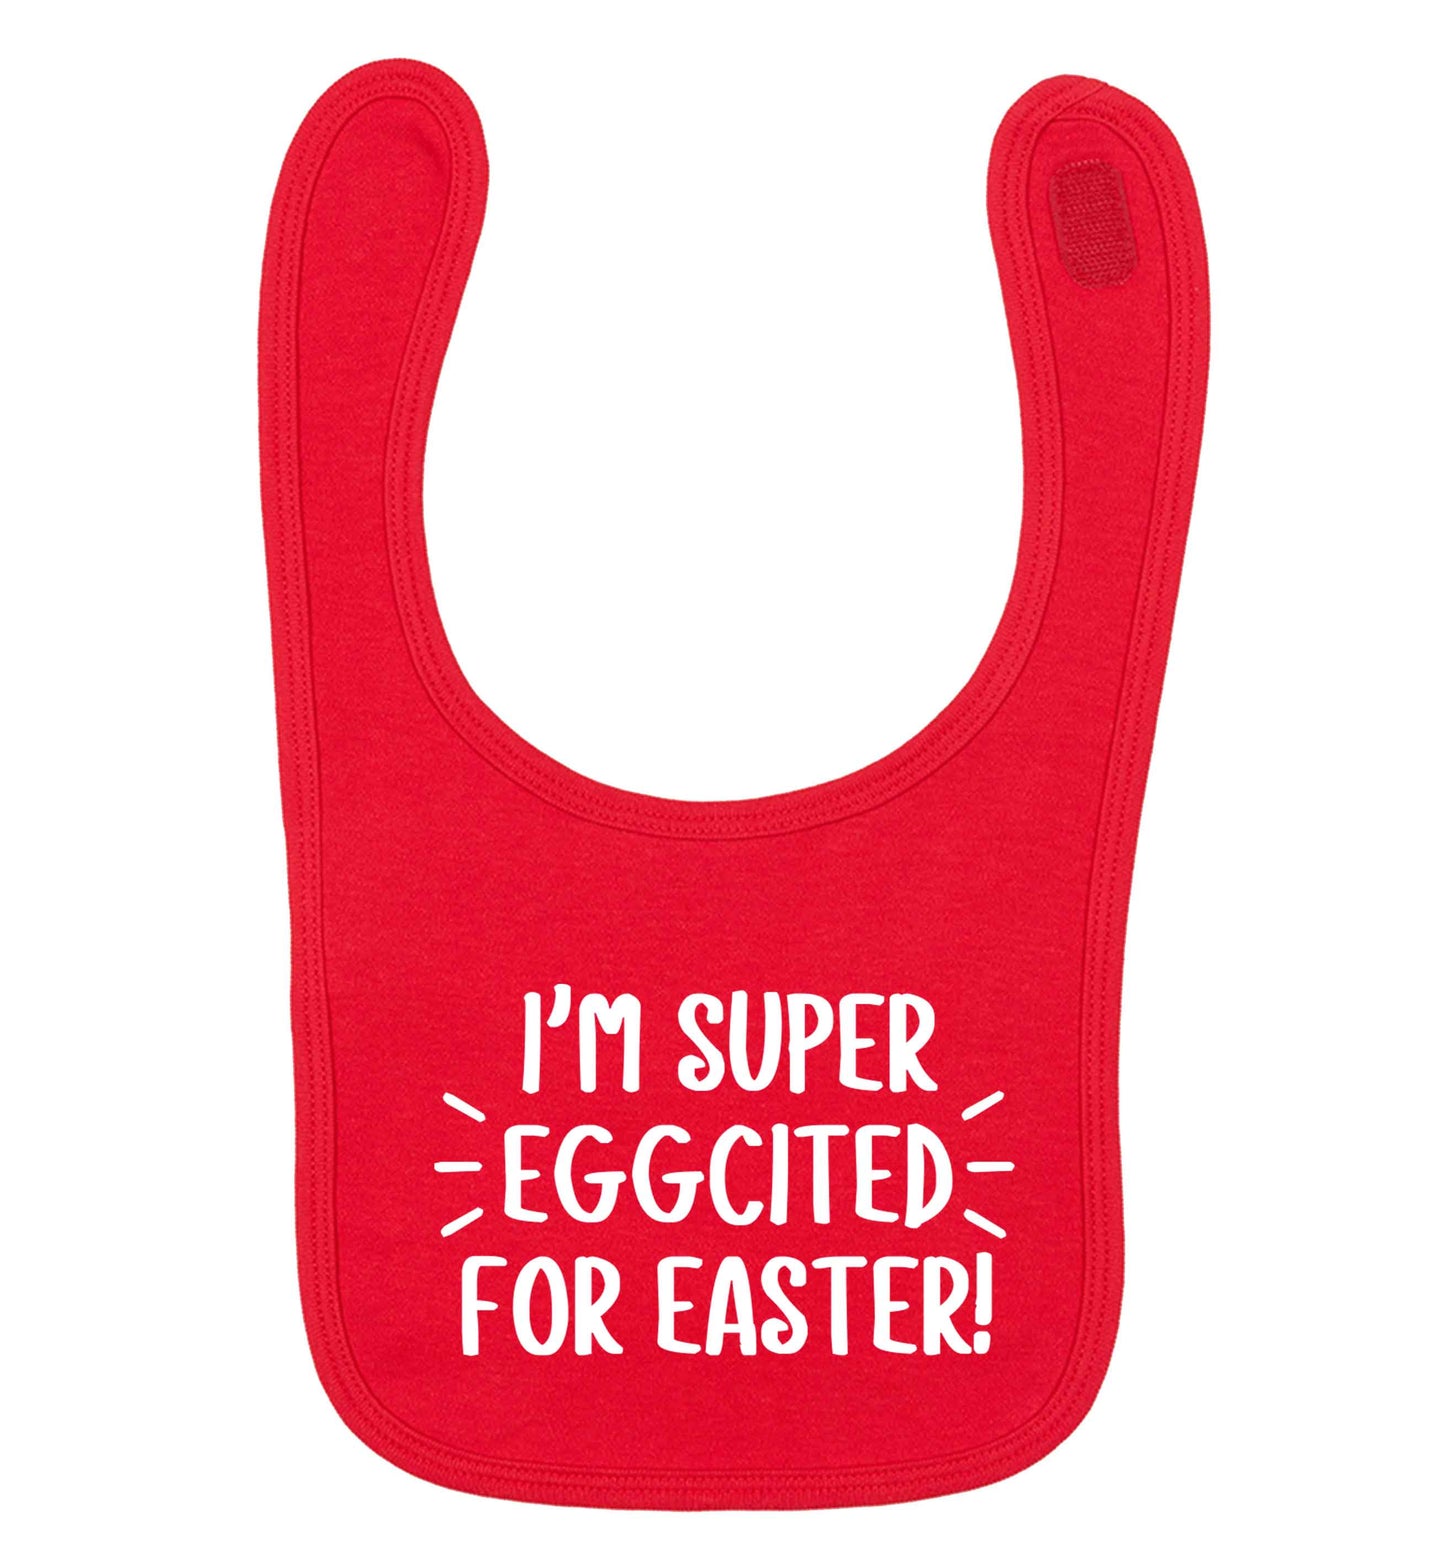 I'm super eggcited for Easter red baby bib